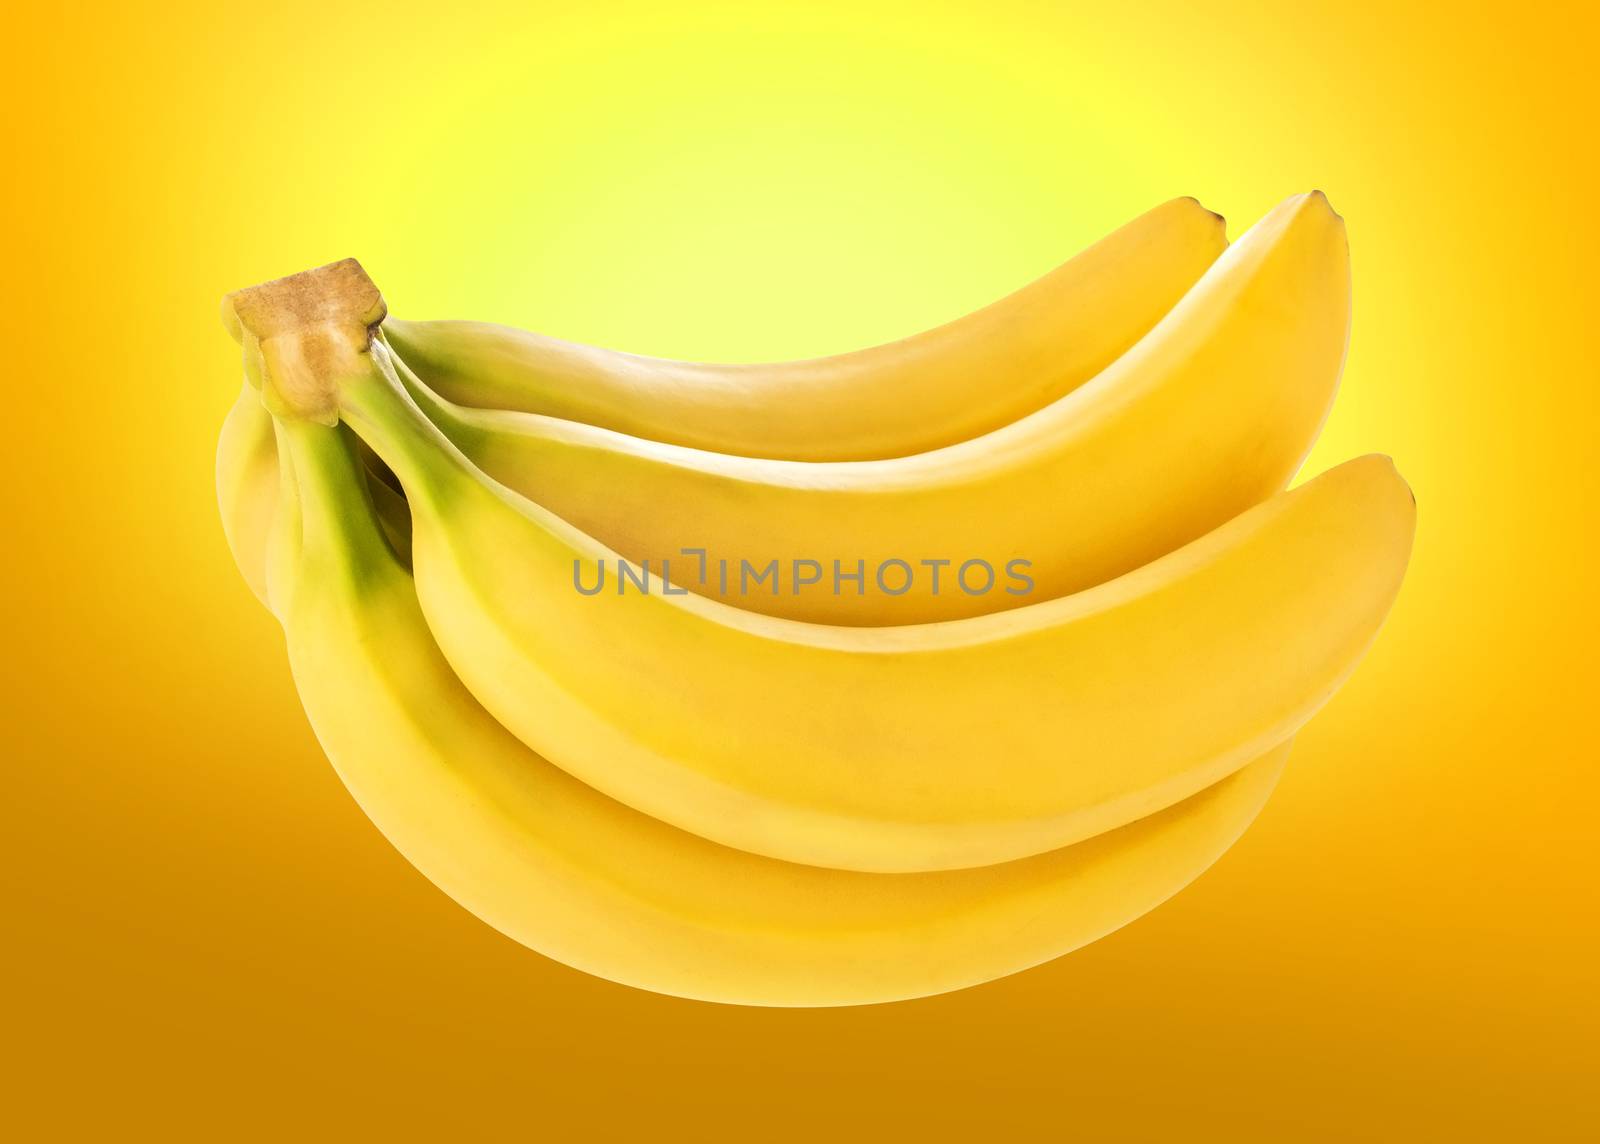 Banana is isolated on a yellow background by xamtiw